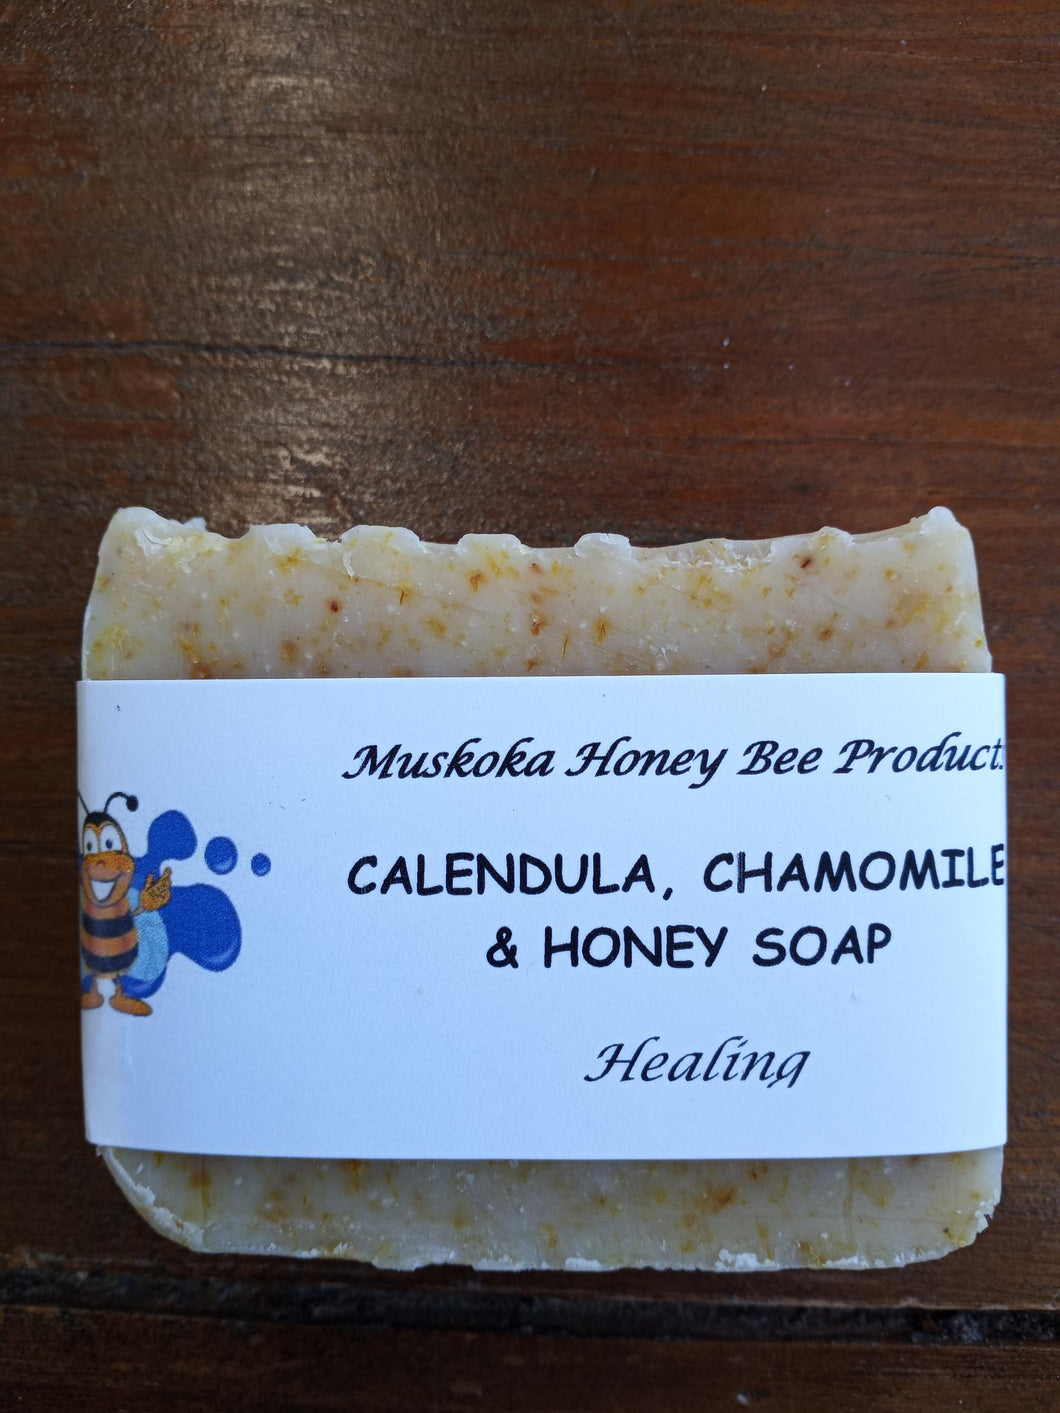 Calendula, Chamomile & Honey Soap